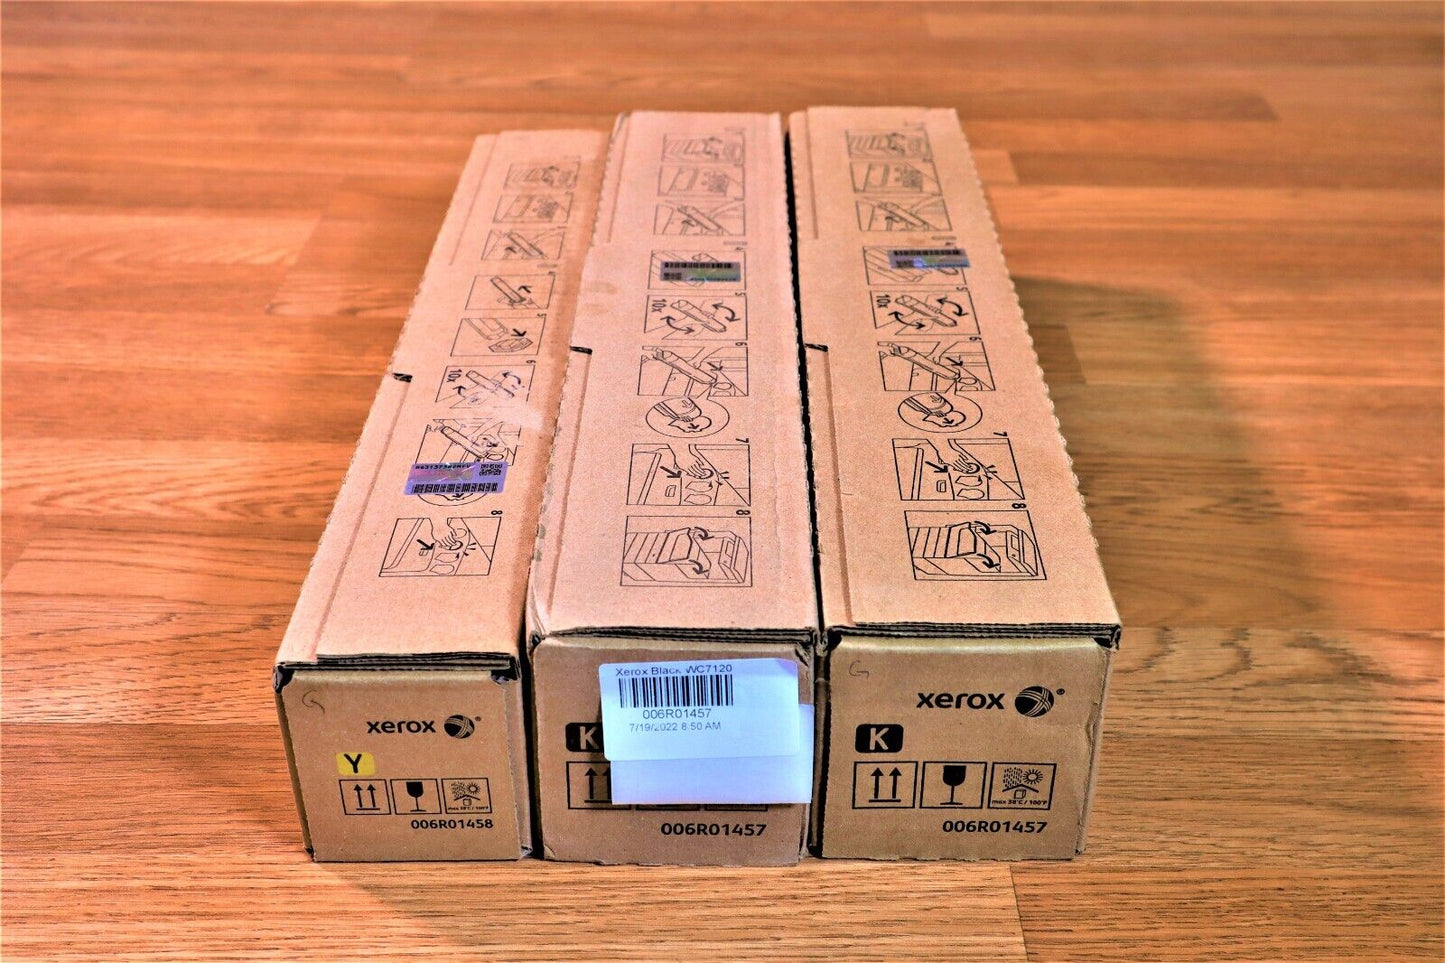 Xerox YKK Toner Set 006R01457,58 For WC 7120/7125/7220/7225/7220i FedEx 2Day!!! - copier-clearance-center